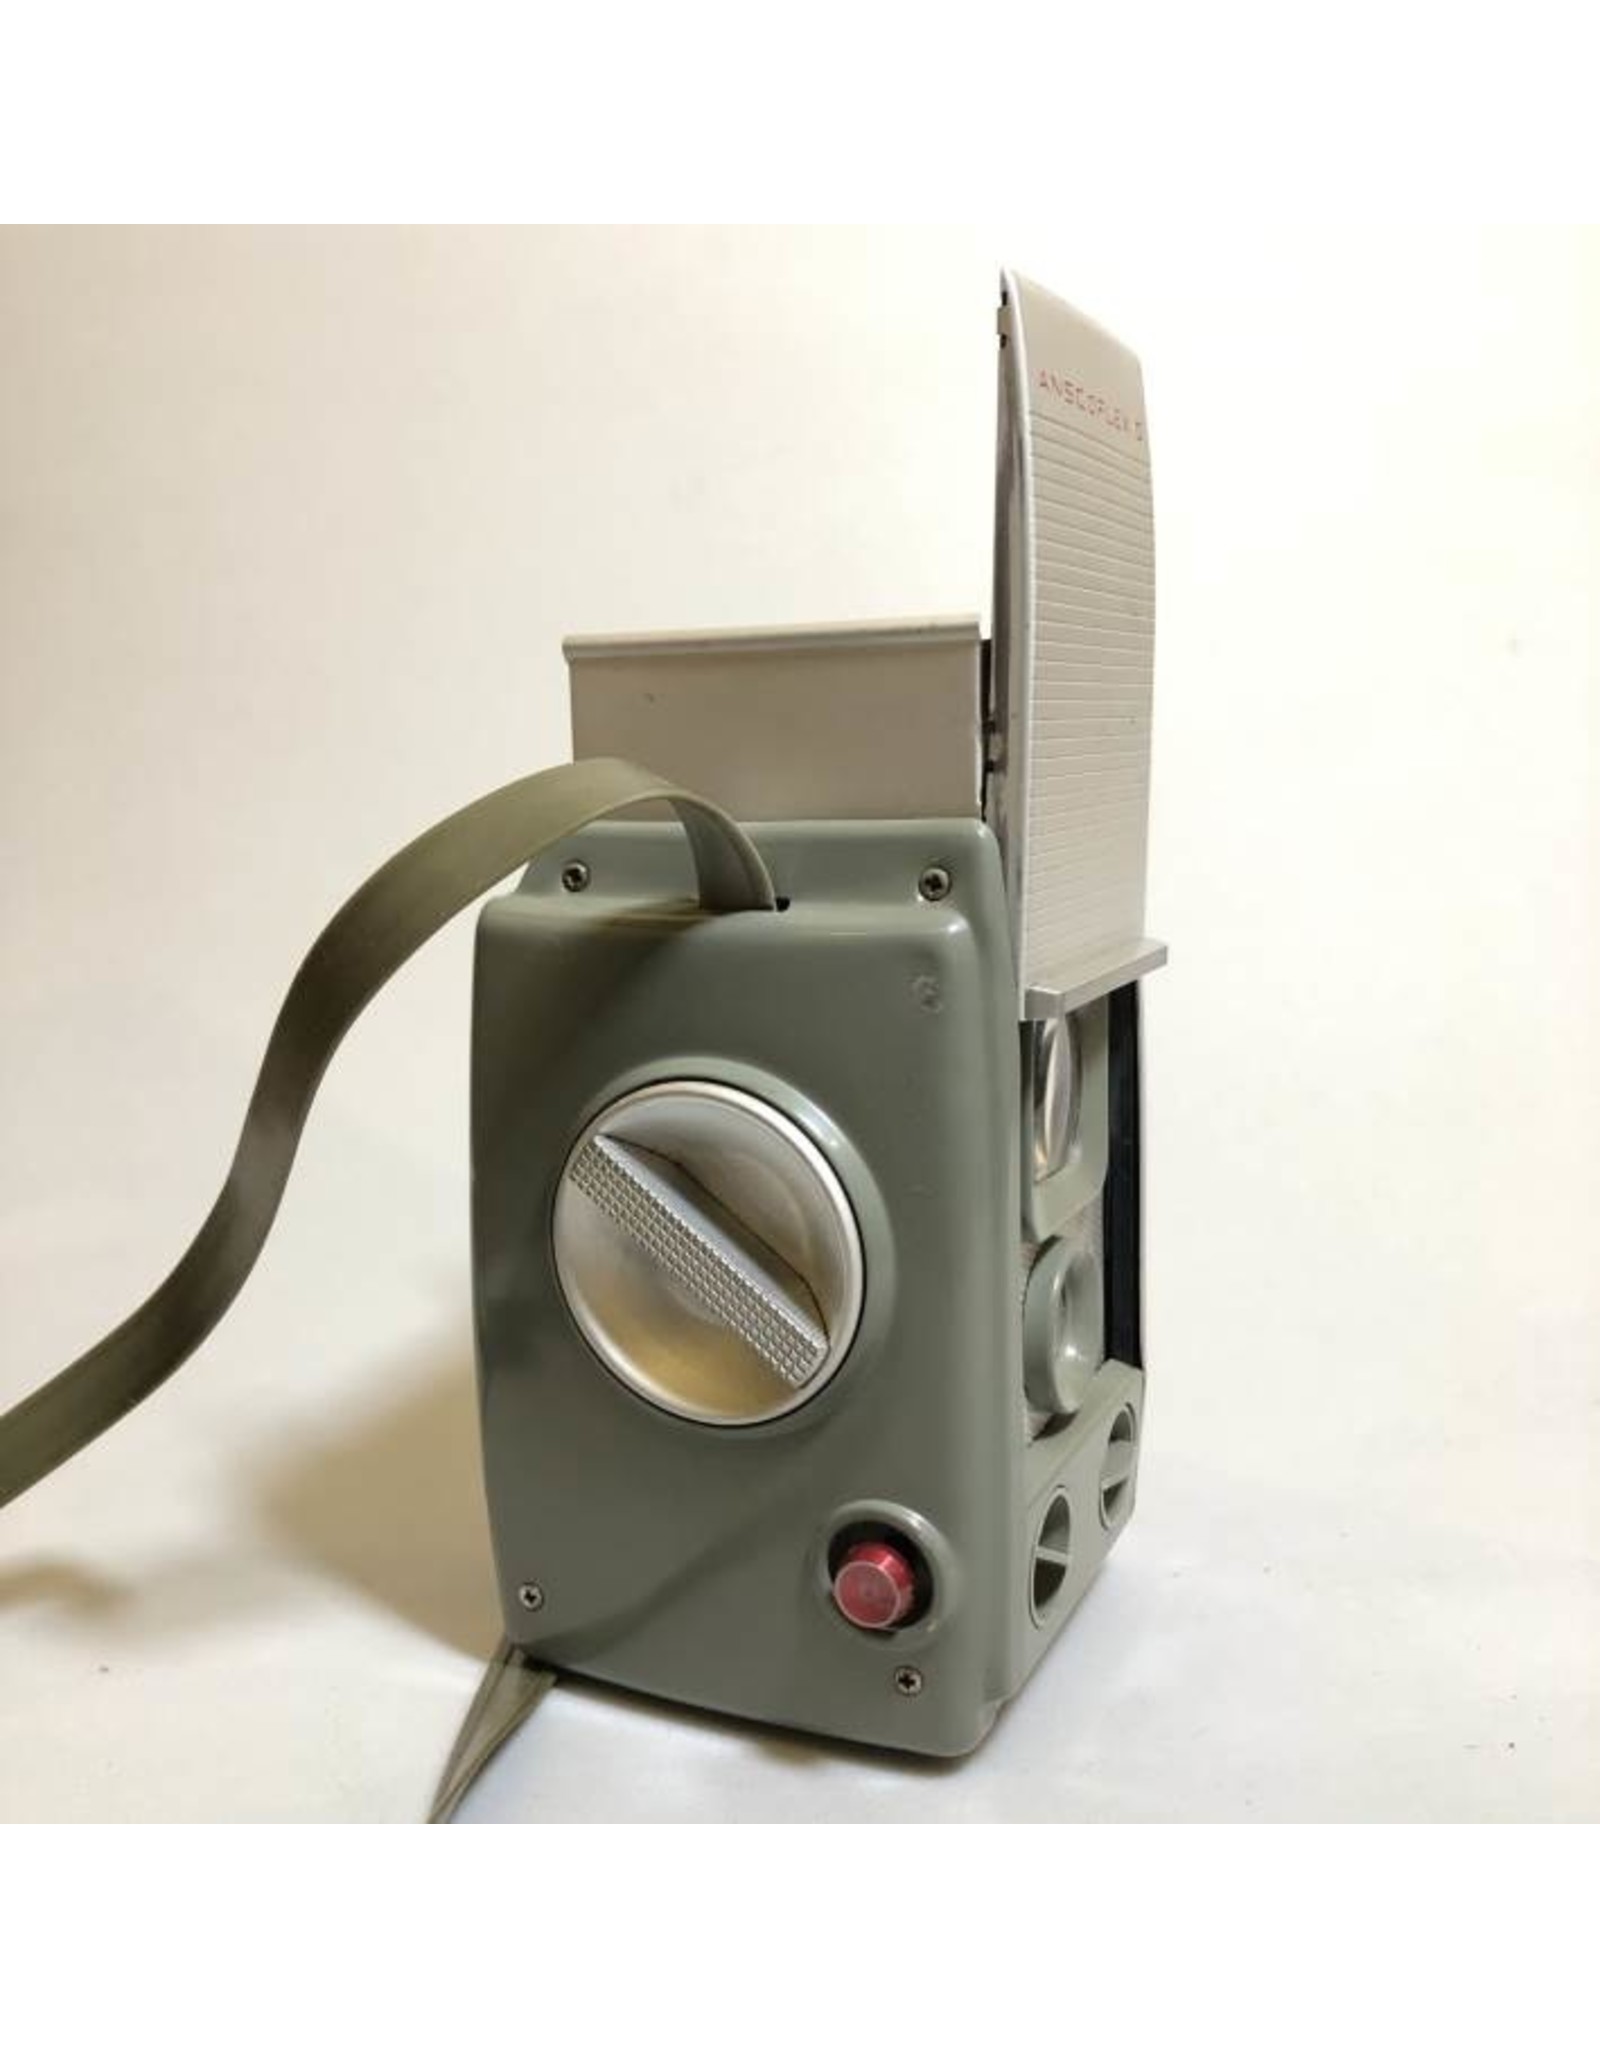 Camera - Anscoflex II medium format in case